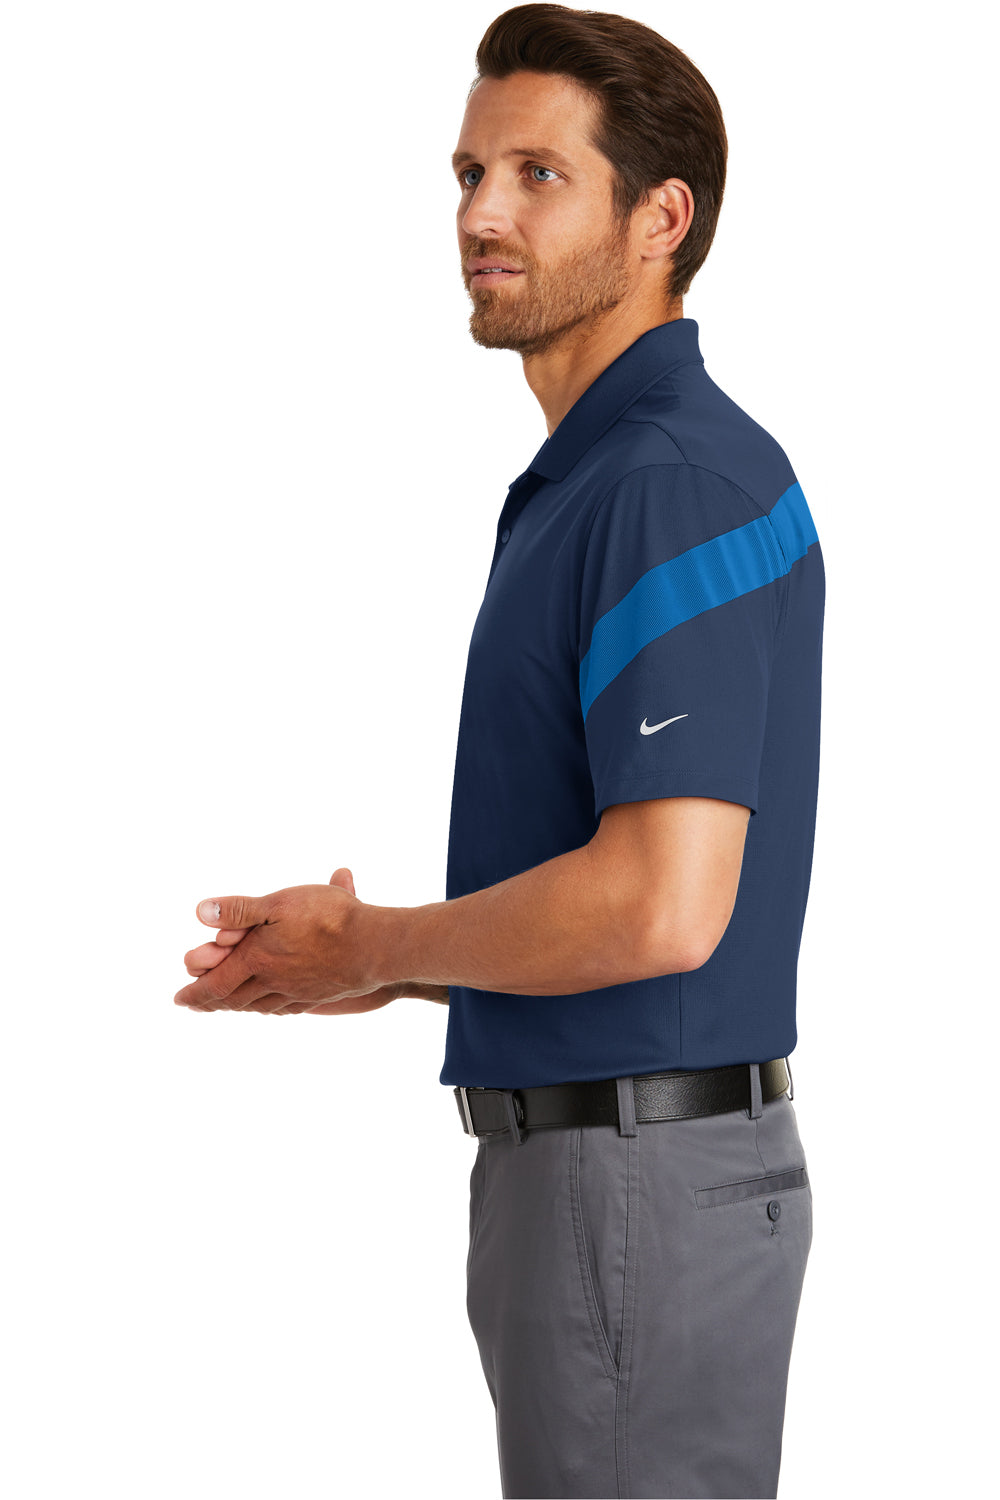 Nike 881657 Mens Commander Dri-Fit Moisture Wicking Short Sleeve Polo Shirt Navy Blue/Photo Blue Side